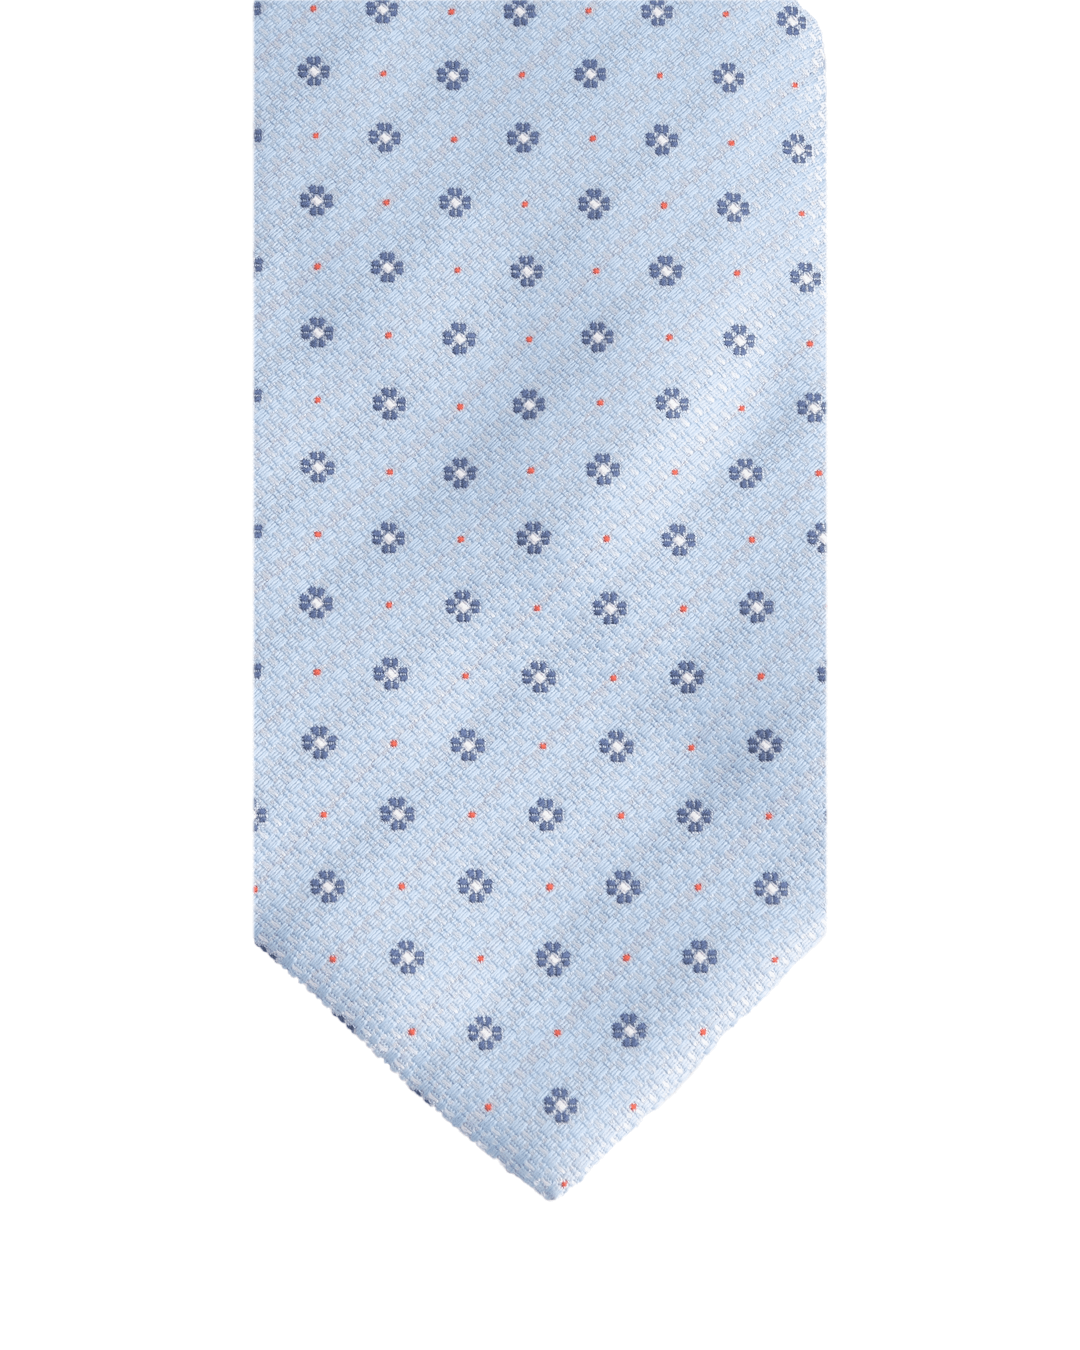 Gagliardi Ties One Size Gagliardi Sky Textured Floral Motif Italian Silk Tie